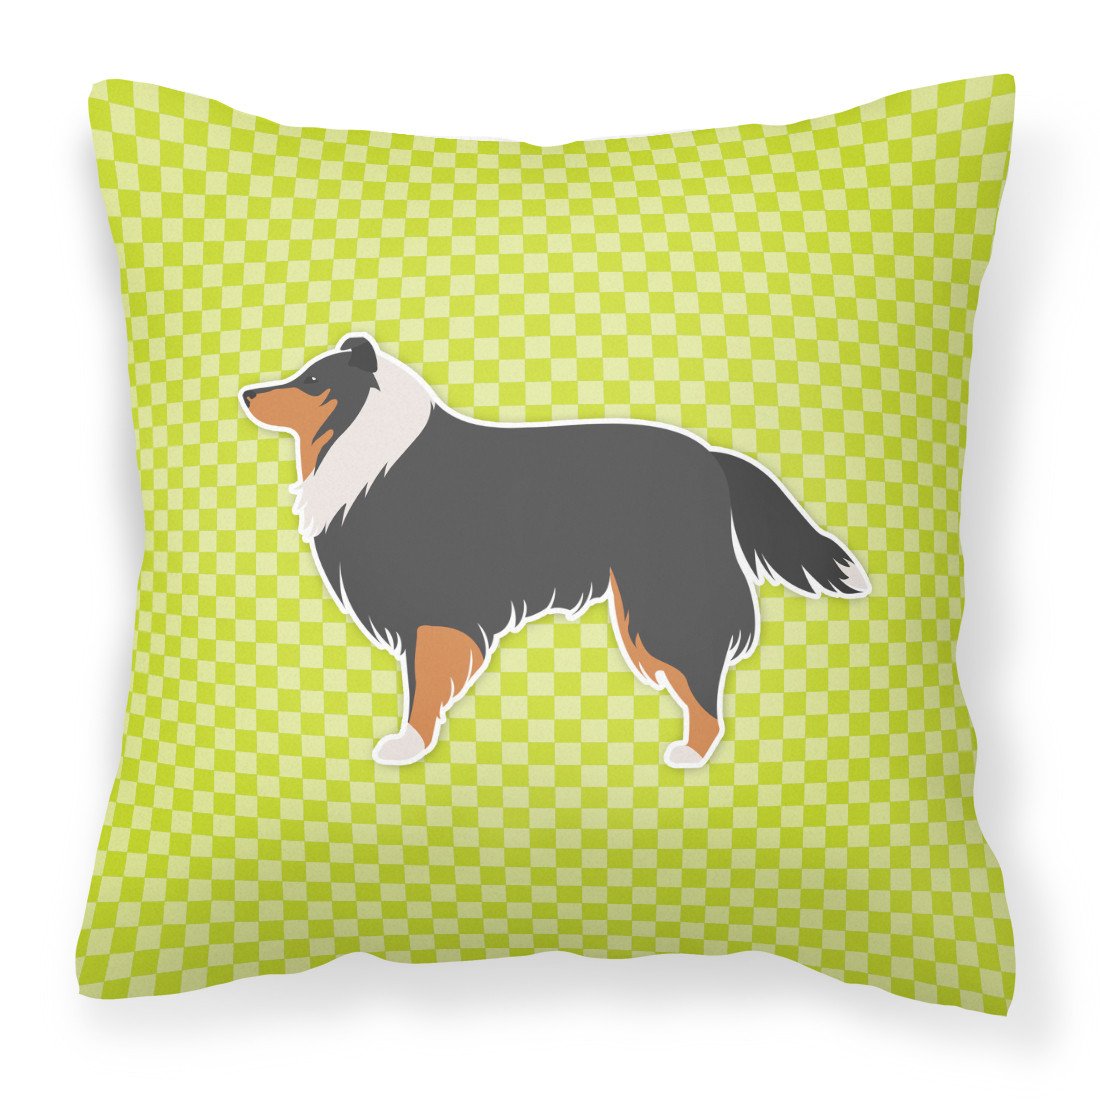 Sheltie/Shetland Sheepdog Checkerboard Green Fabric Decorative Pillow BB3830PW1818 by Caroline's Treasures